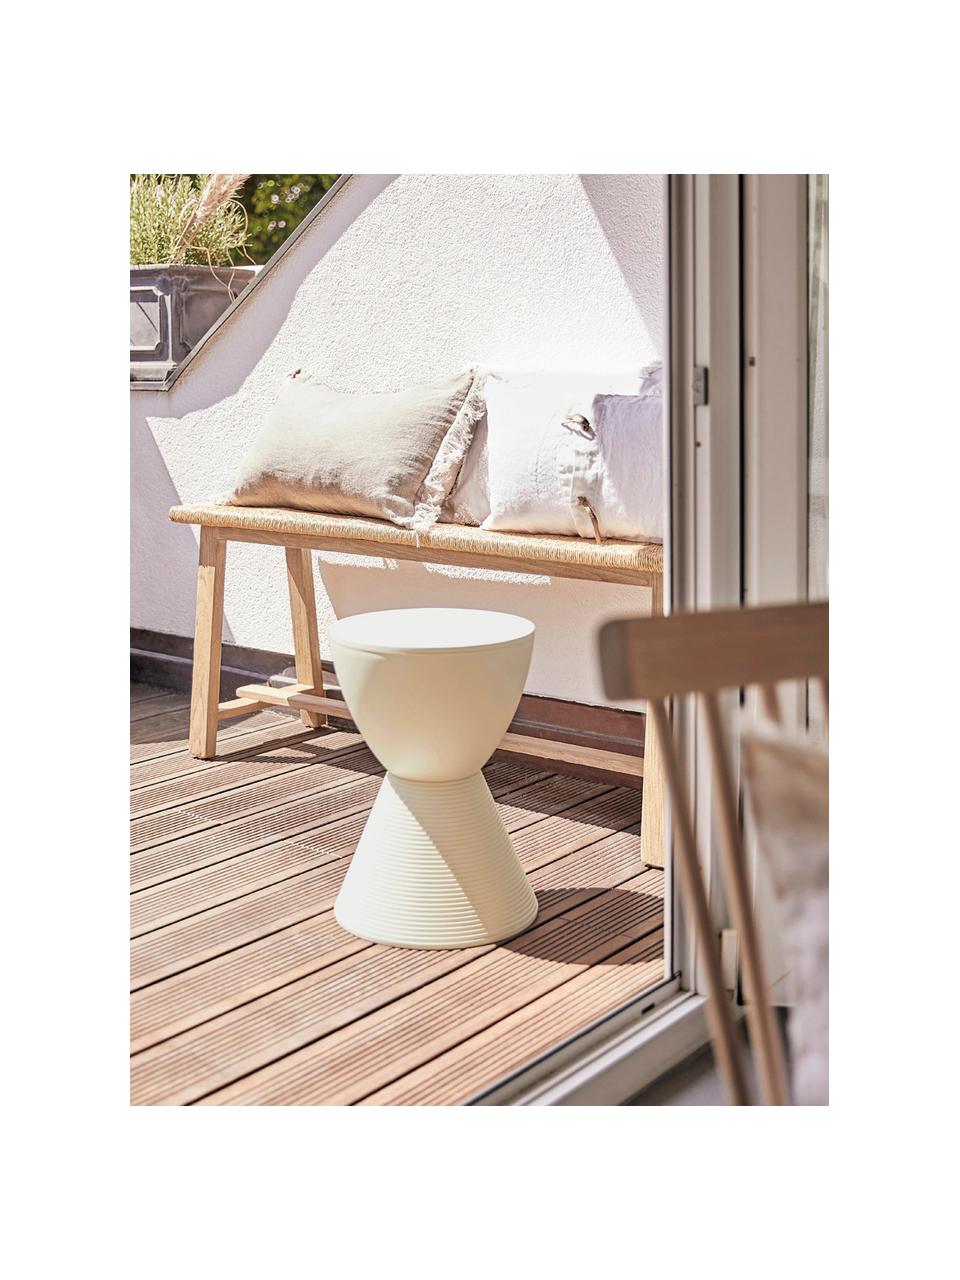 Dizajnový odkladací stolík Prince AHA, Pigmentovaný polypropylén, certifikát Greenguard, Lomená biela, Ø 30 x V 43 cm